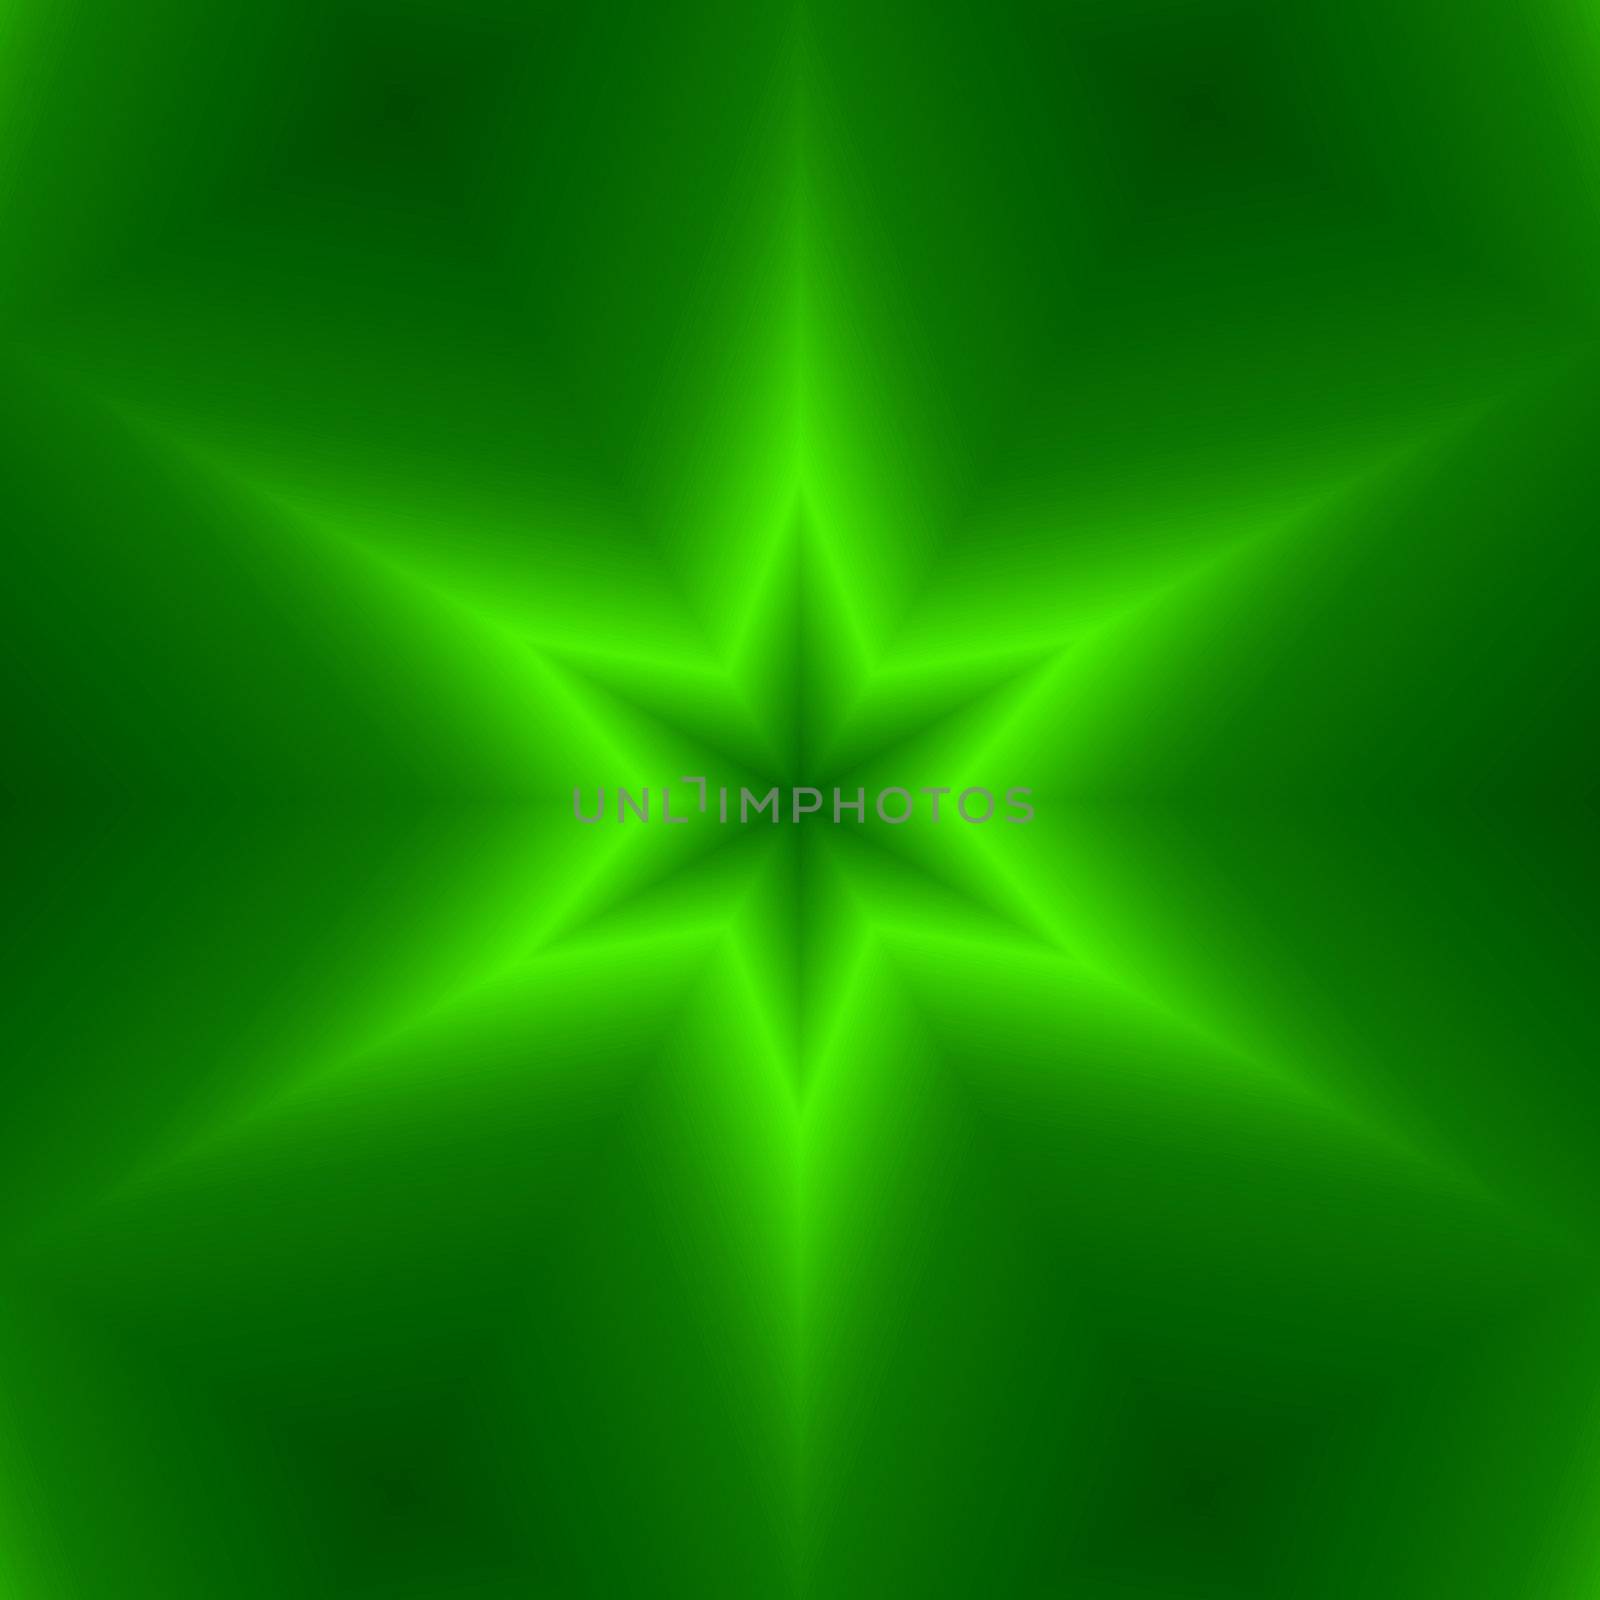 green six point star design by leafy